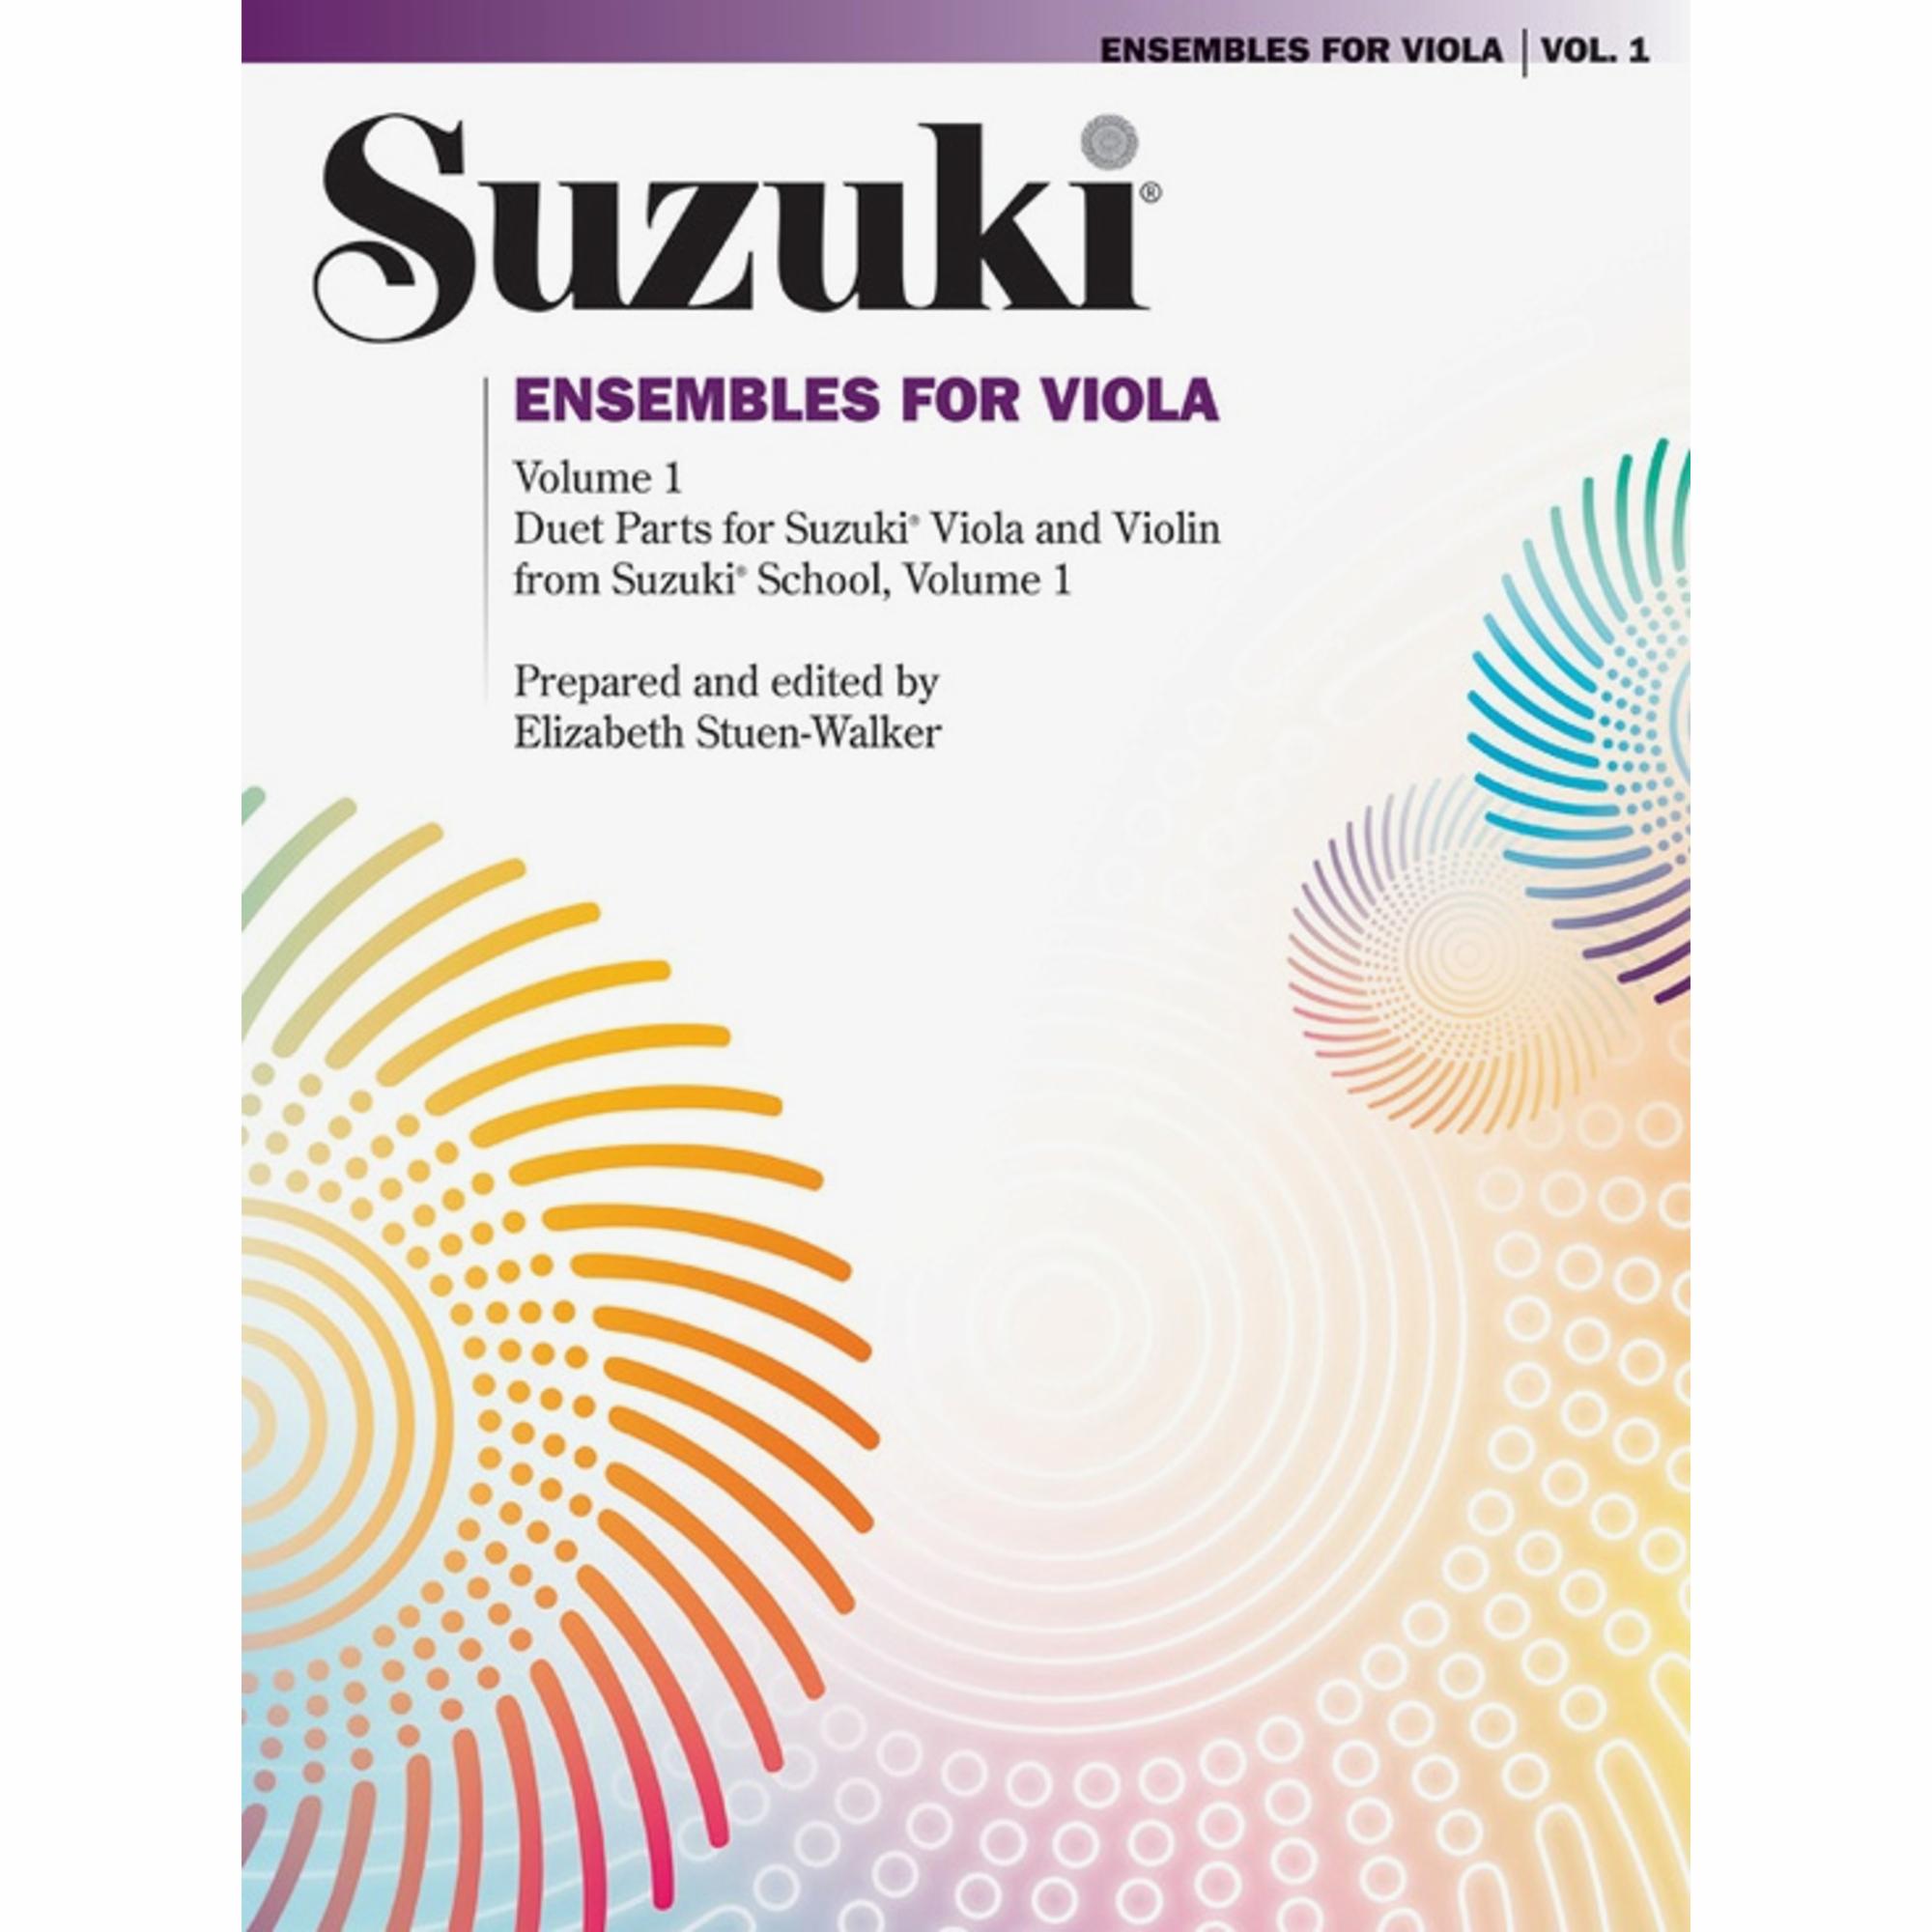 Suzuki: Ensembles for Viola